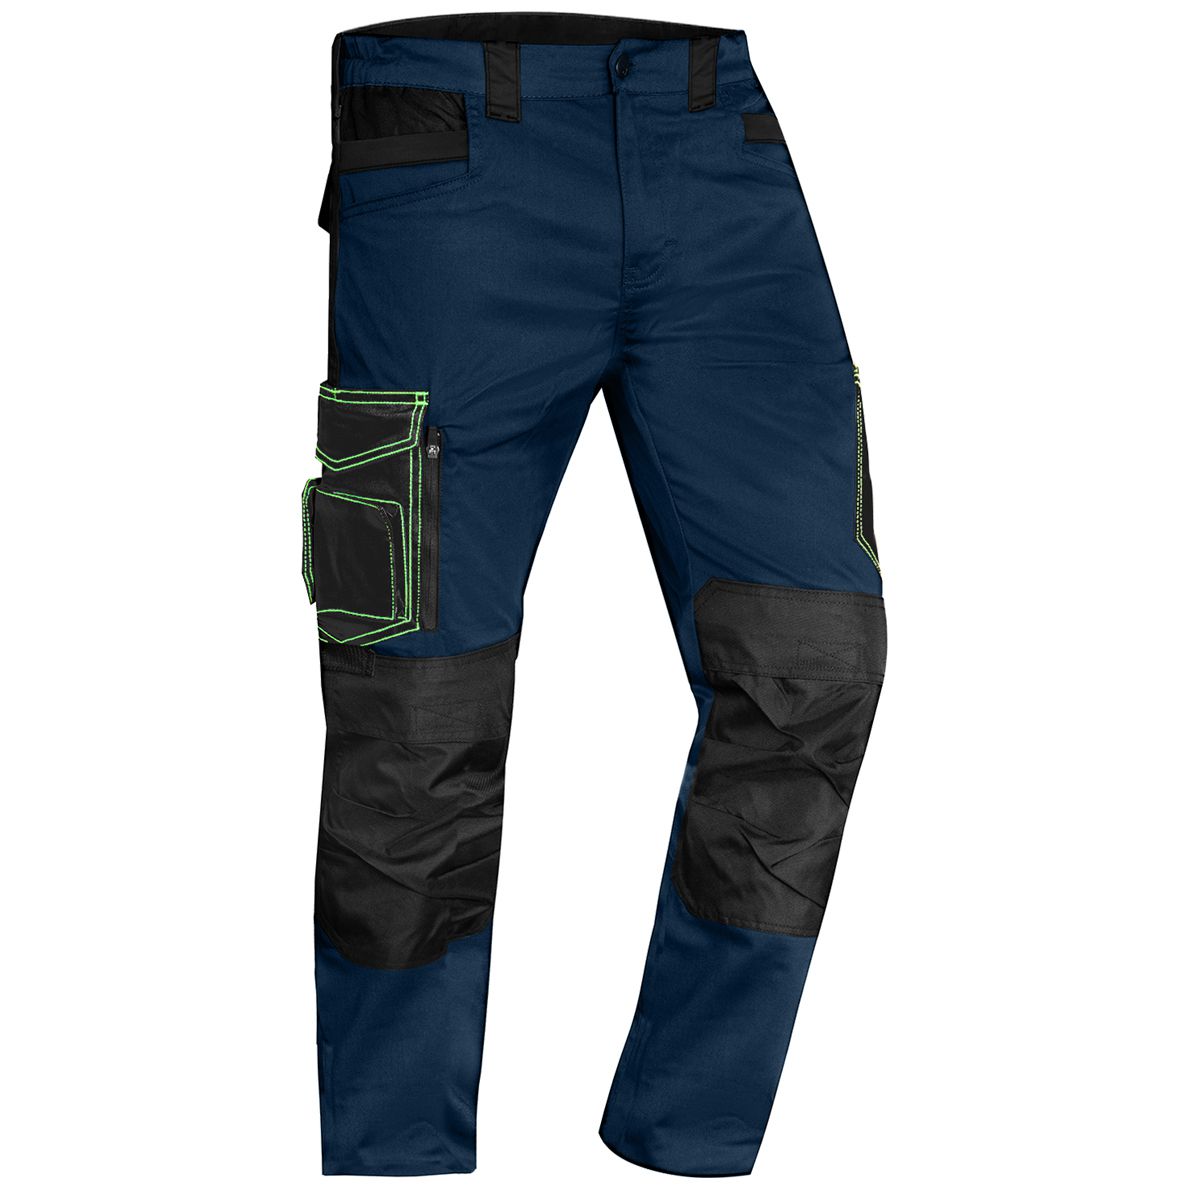 ACE Genesis Men's Work Trousers Long - Men's Cargo Trousers for Work - Stretch Waistband & Knee Pockets - Dark Blue - 50